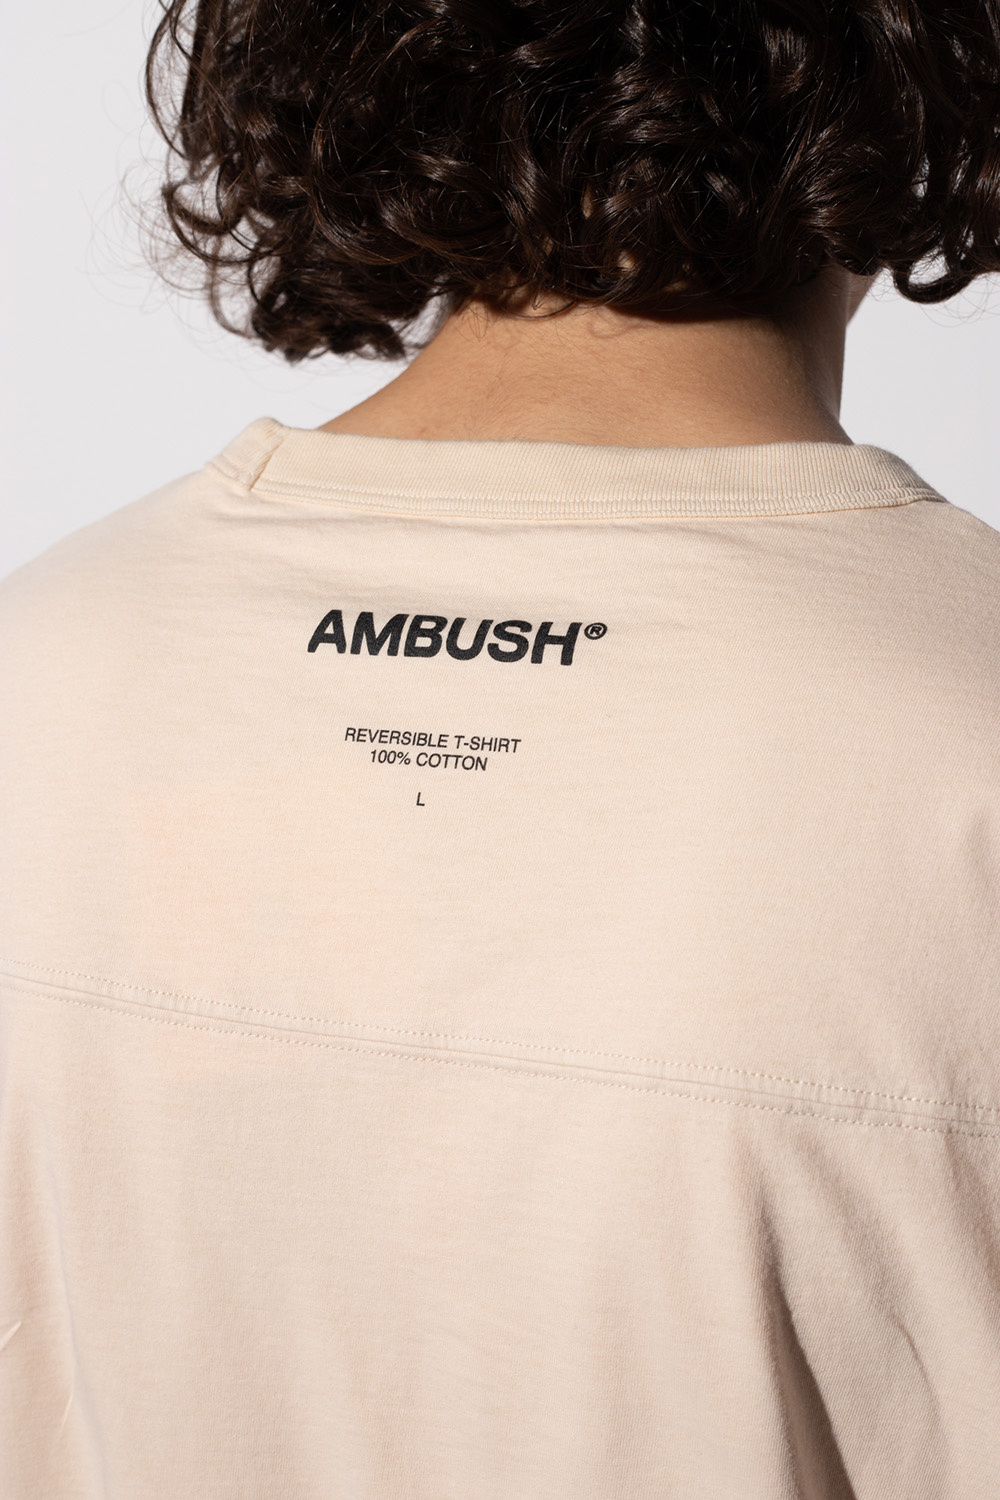 Ambush Reversible T-shirt with logo